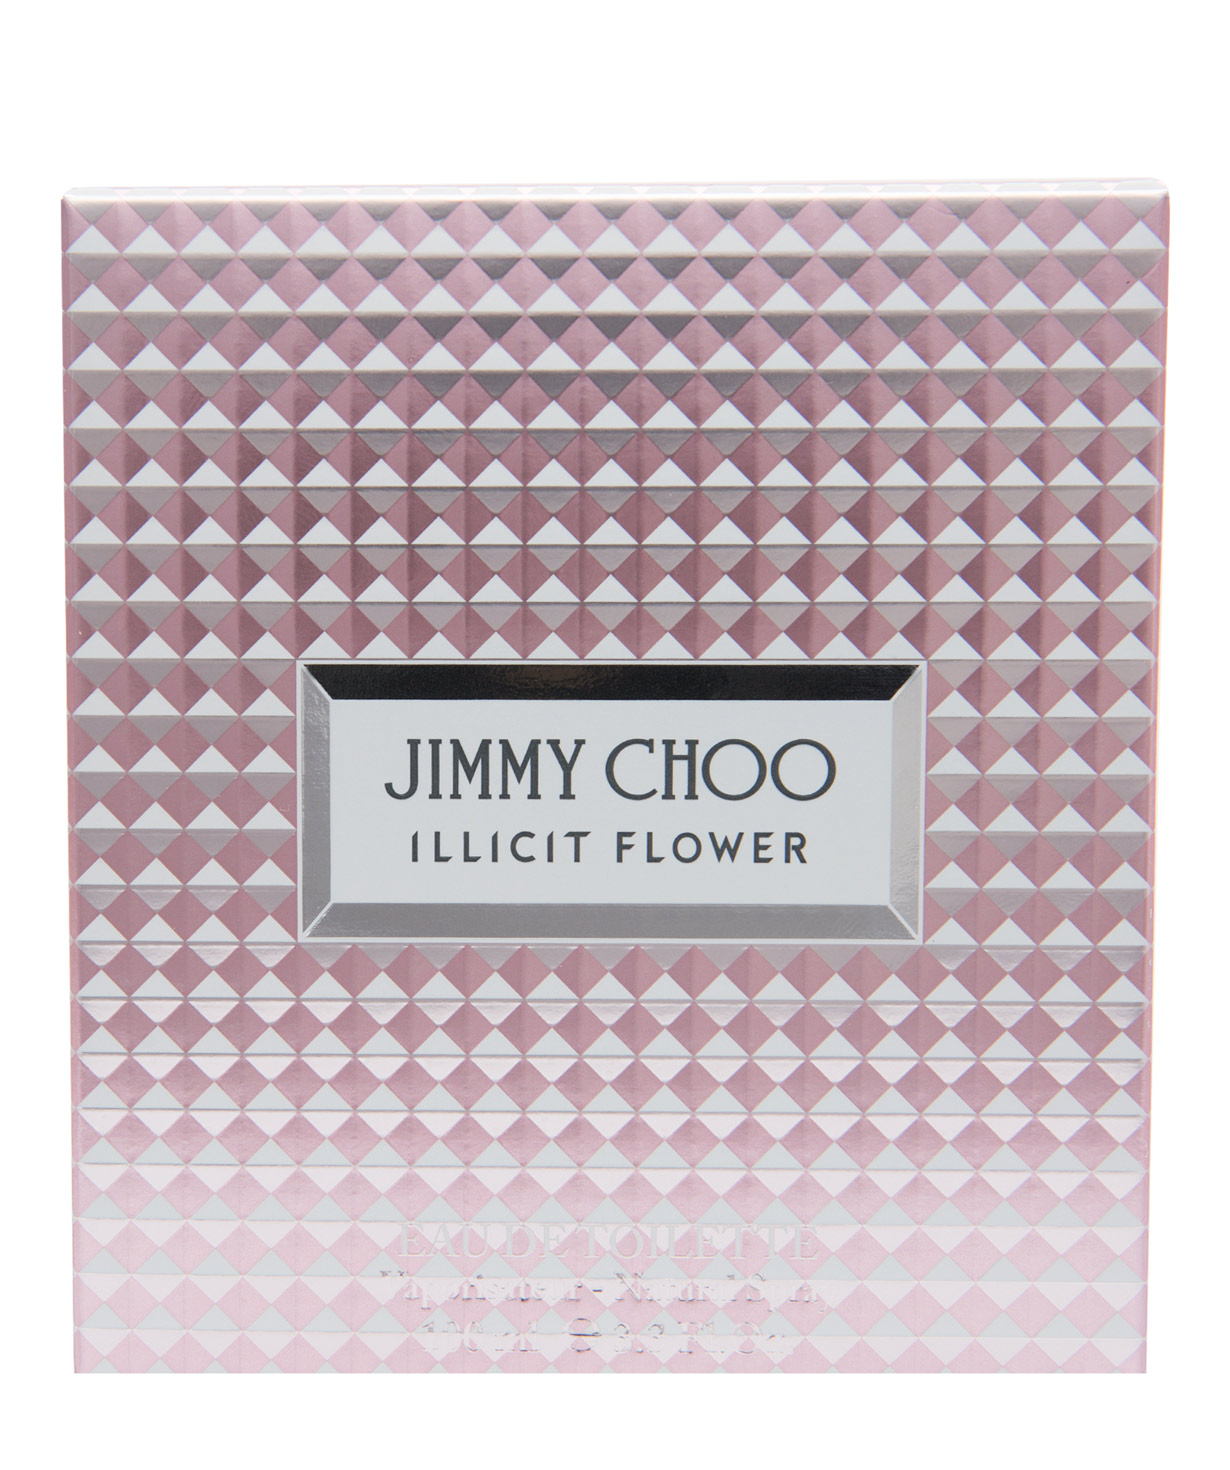 Парфюм «Jimmy Choo» Illicit Flower, женский, 100 мл